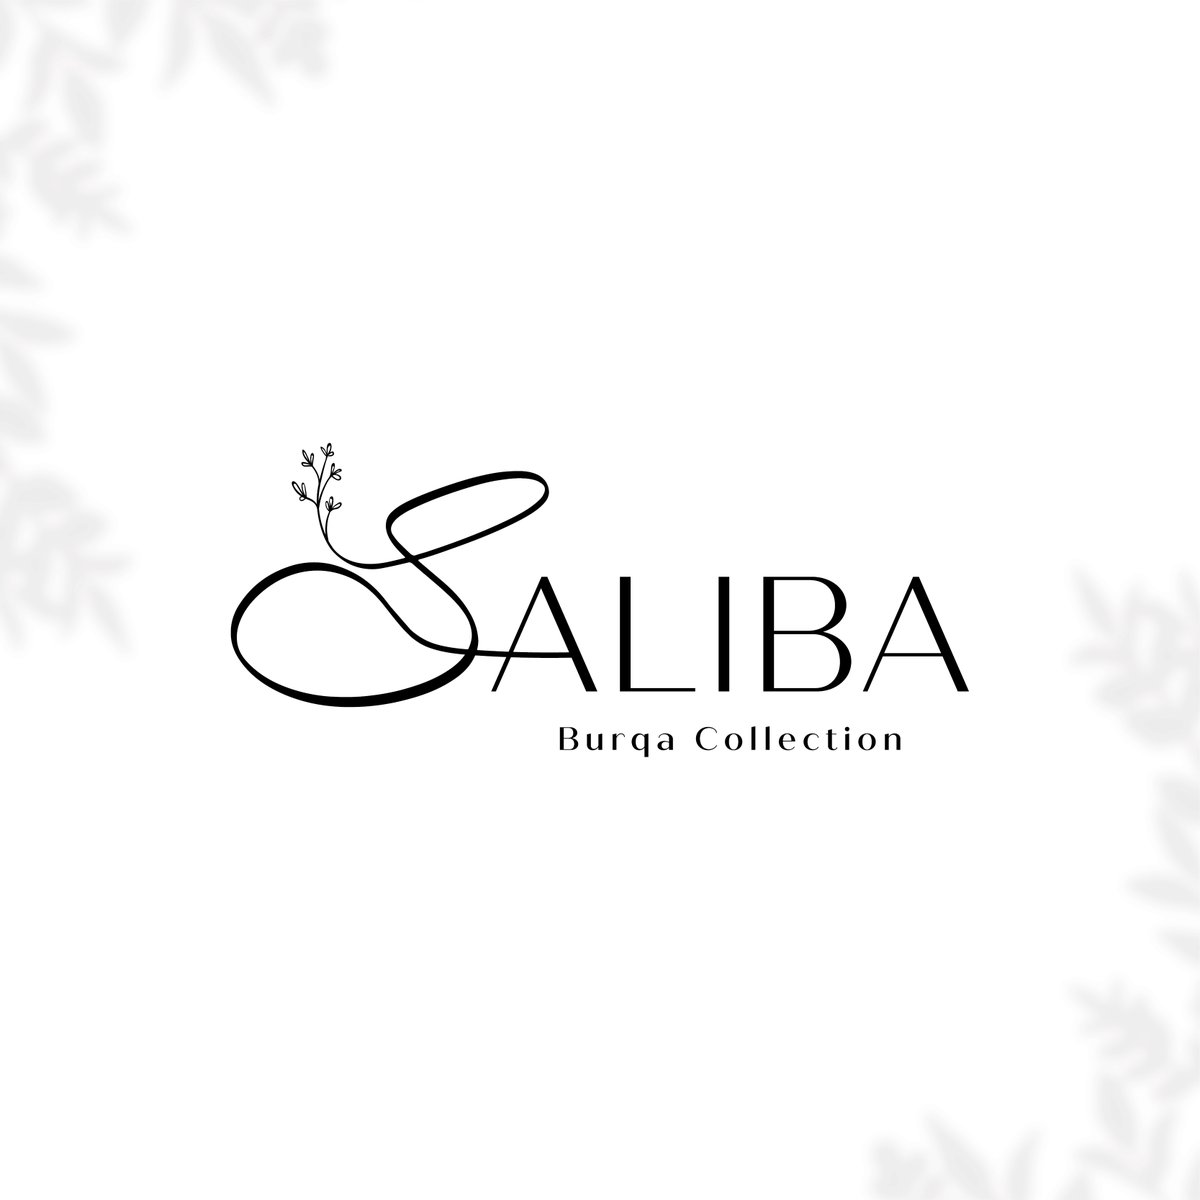 Concept: SALIBA burqa collection - Logo Design(Unused) 

#LogoDesign #logotype #logos #Heroes #NashvillePD #mamamoo #tuesdayvide #BirminghamPride #bitcoin📷📷📷 #America
#abaya 
#SupremeCourtofpakistan 
#انتخابی_نشان_عمران_خان